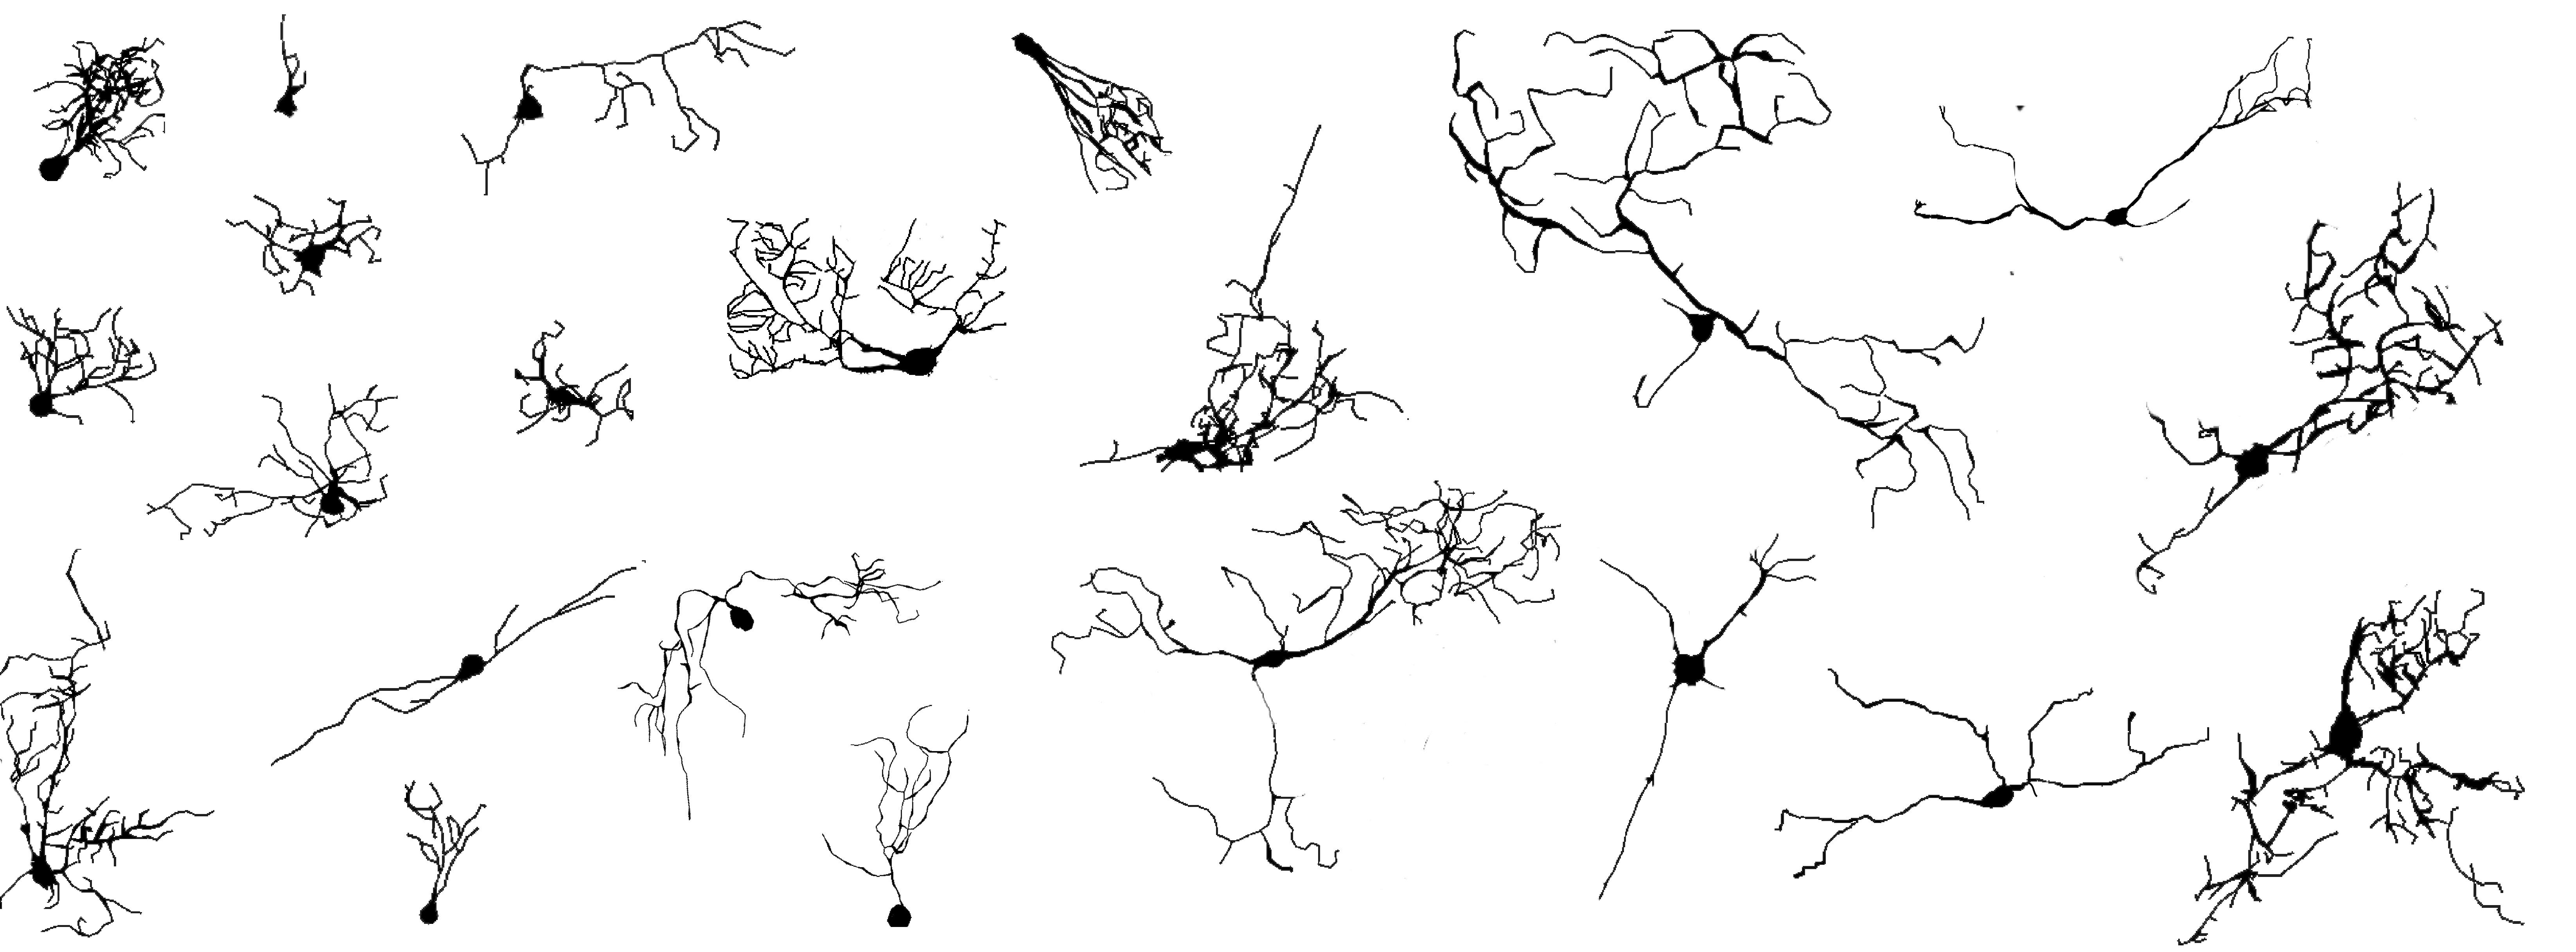 morphological heterogeneity of bulbar dopaminergic neurons (Adapted from Galliano et al, eLife 2018)